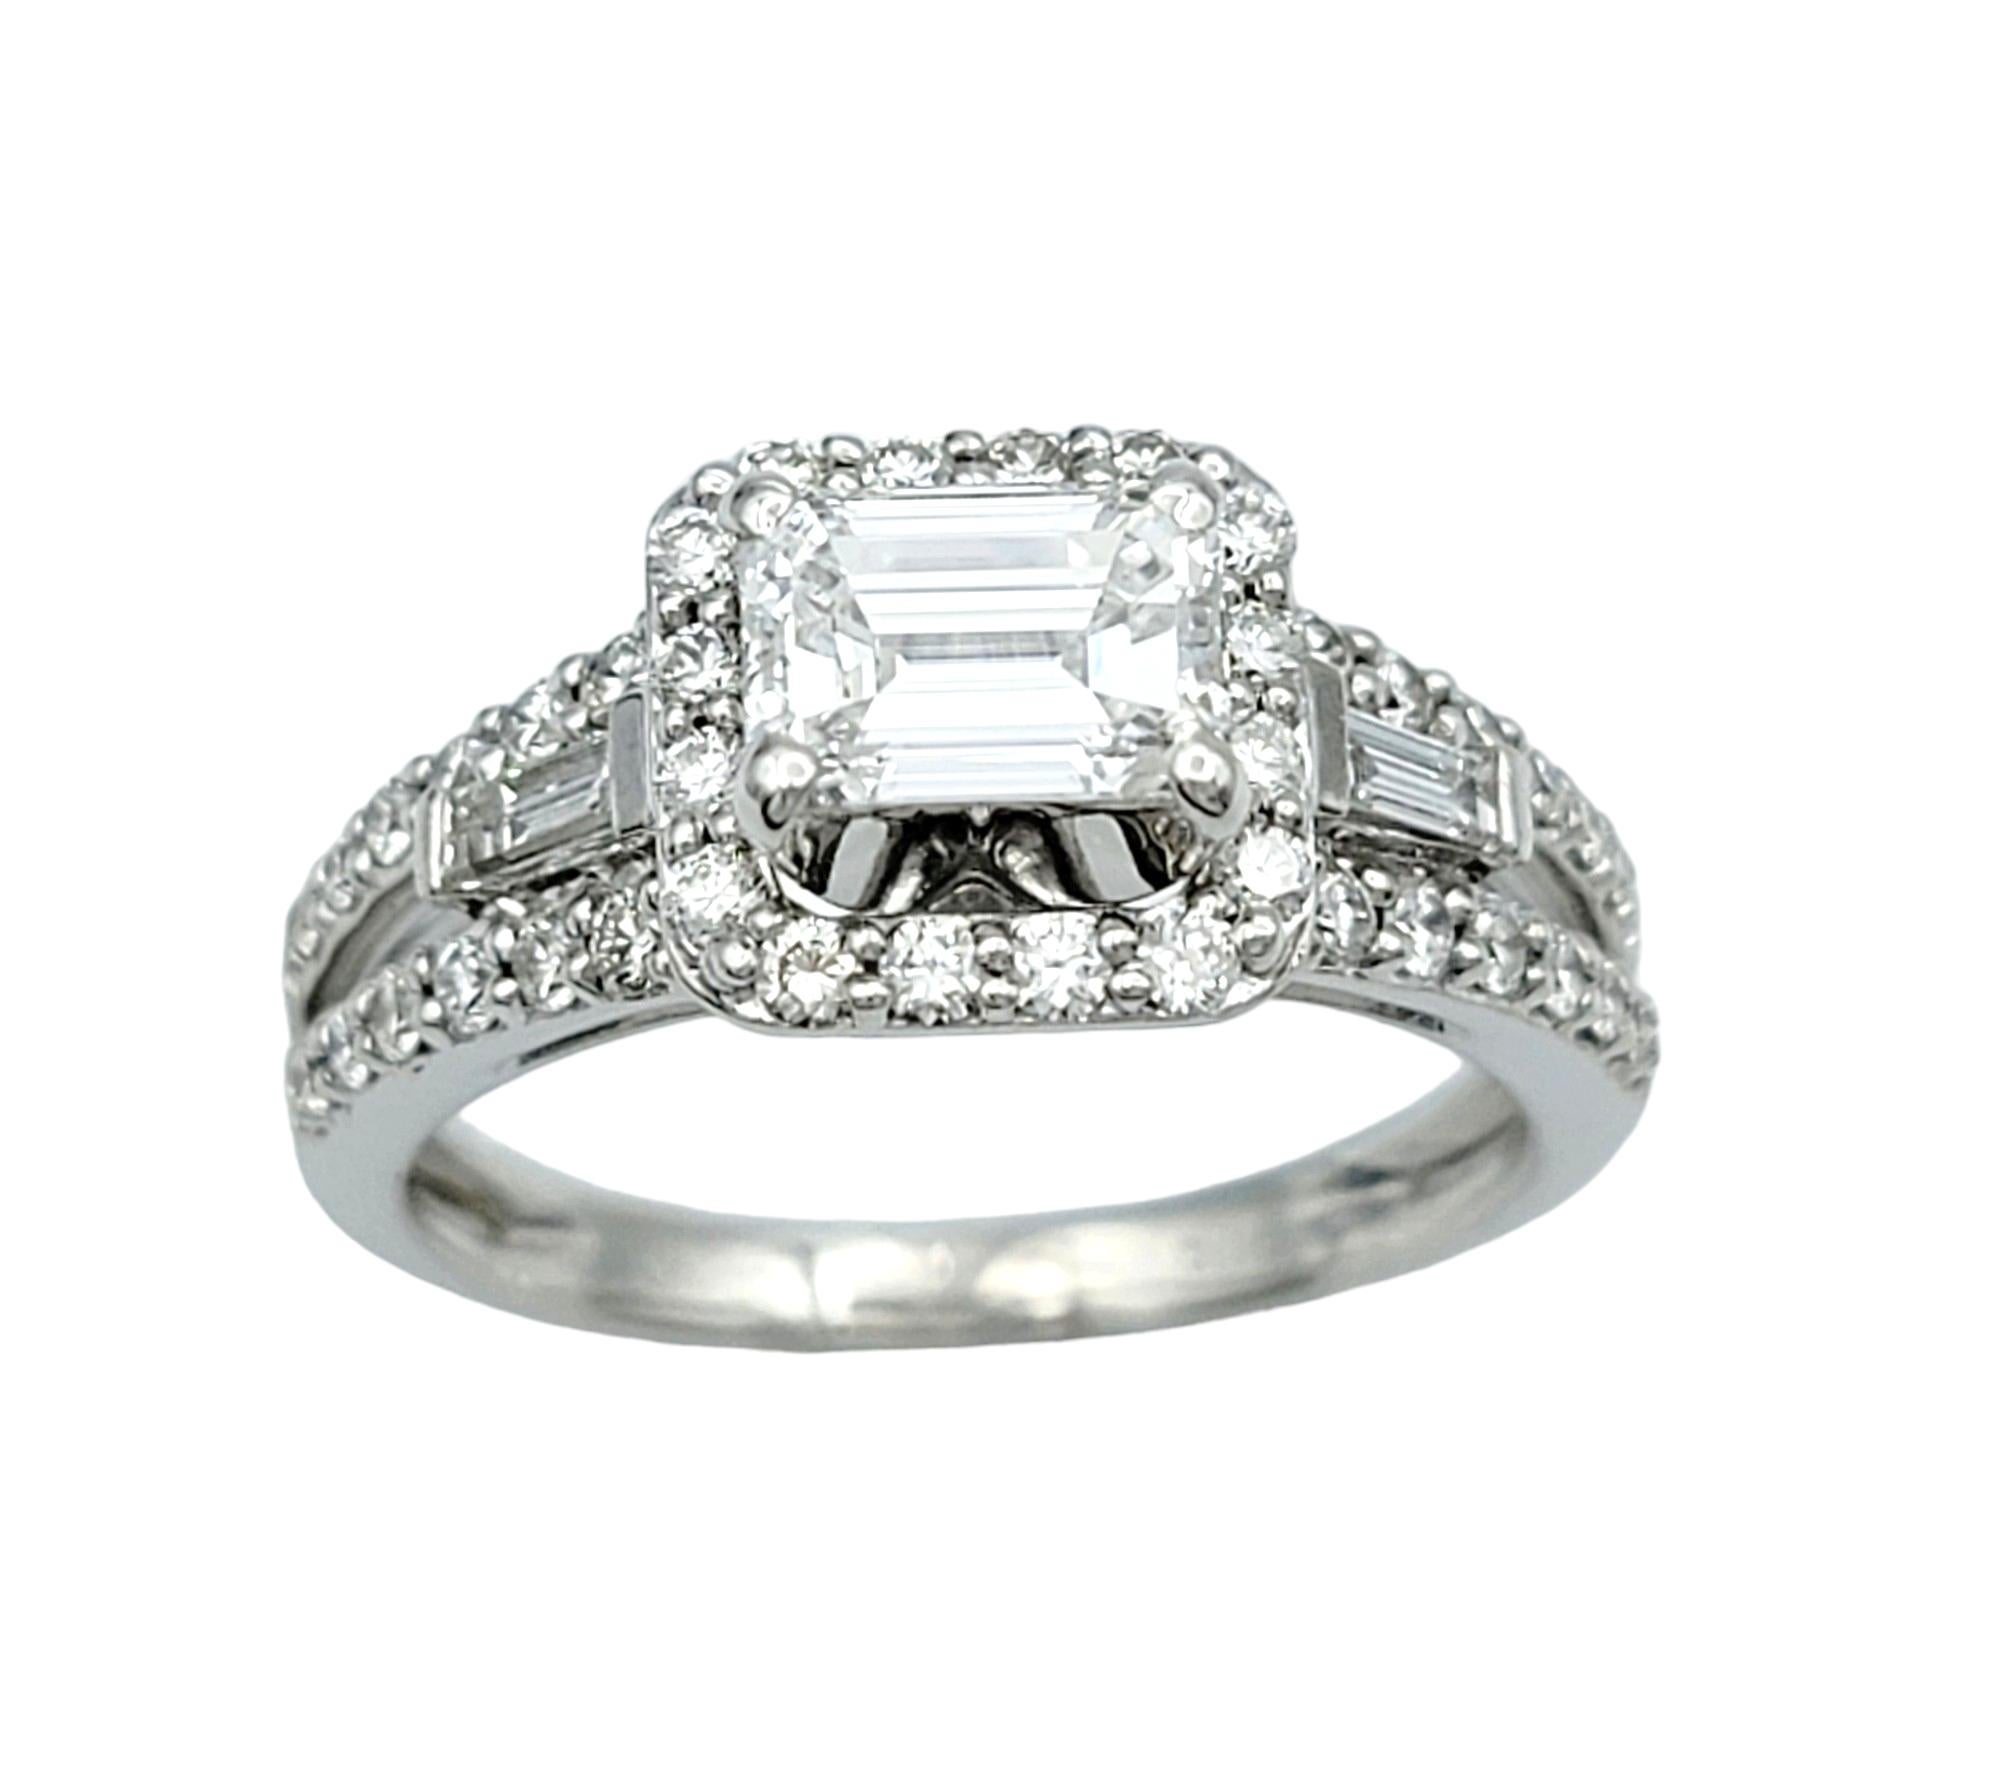 Women's Emerald Cut Diamond and Squared Halo Engagement Ring White Gold, D-E / VVS1-VVS2 For Sale